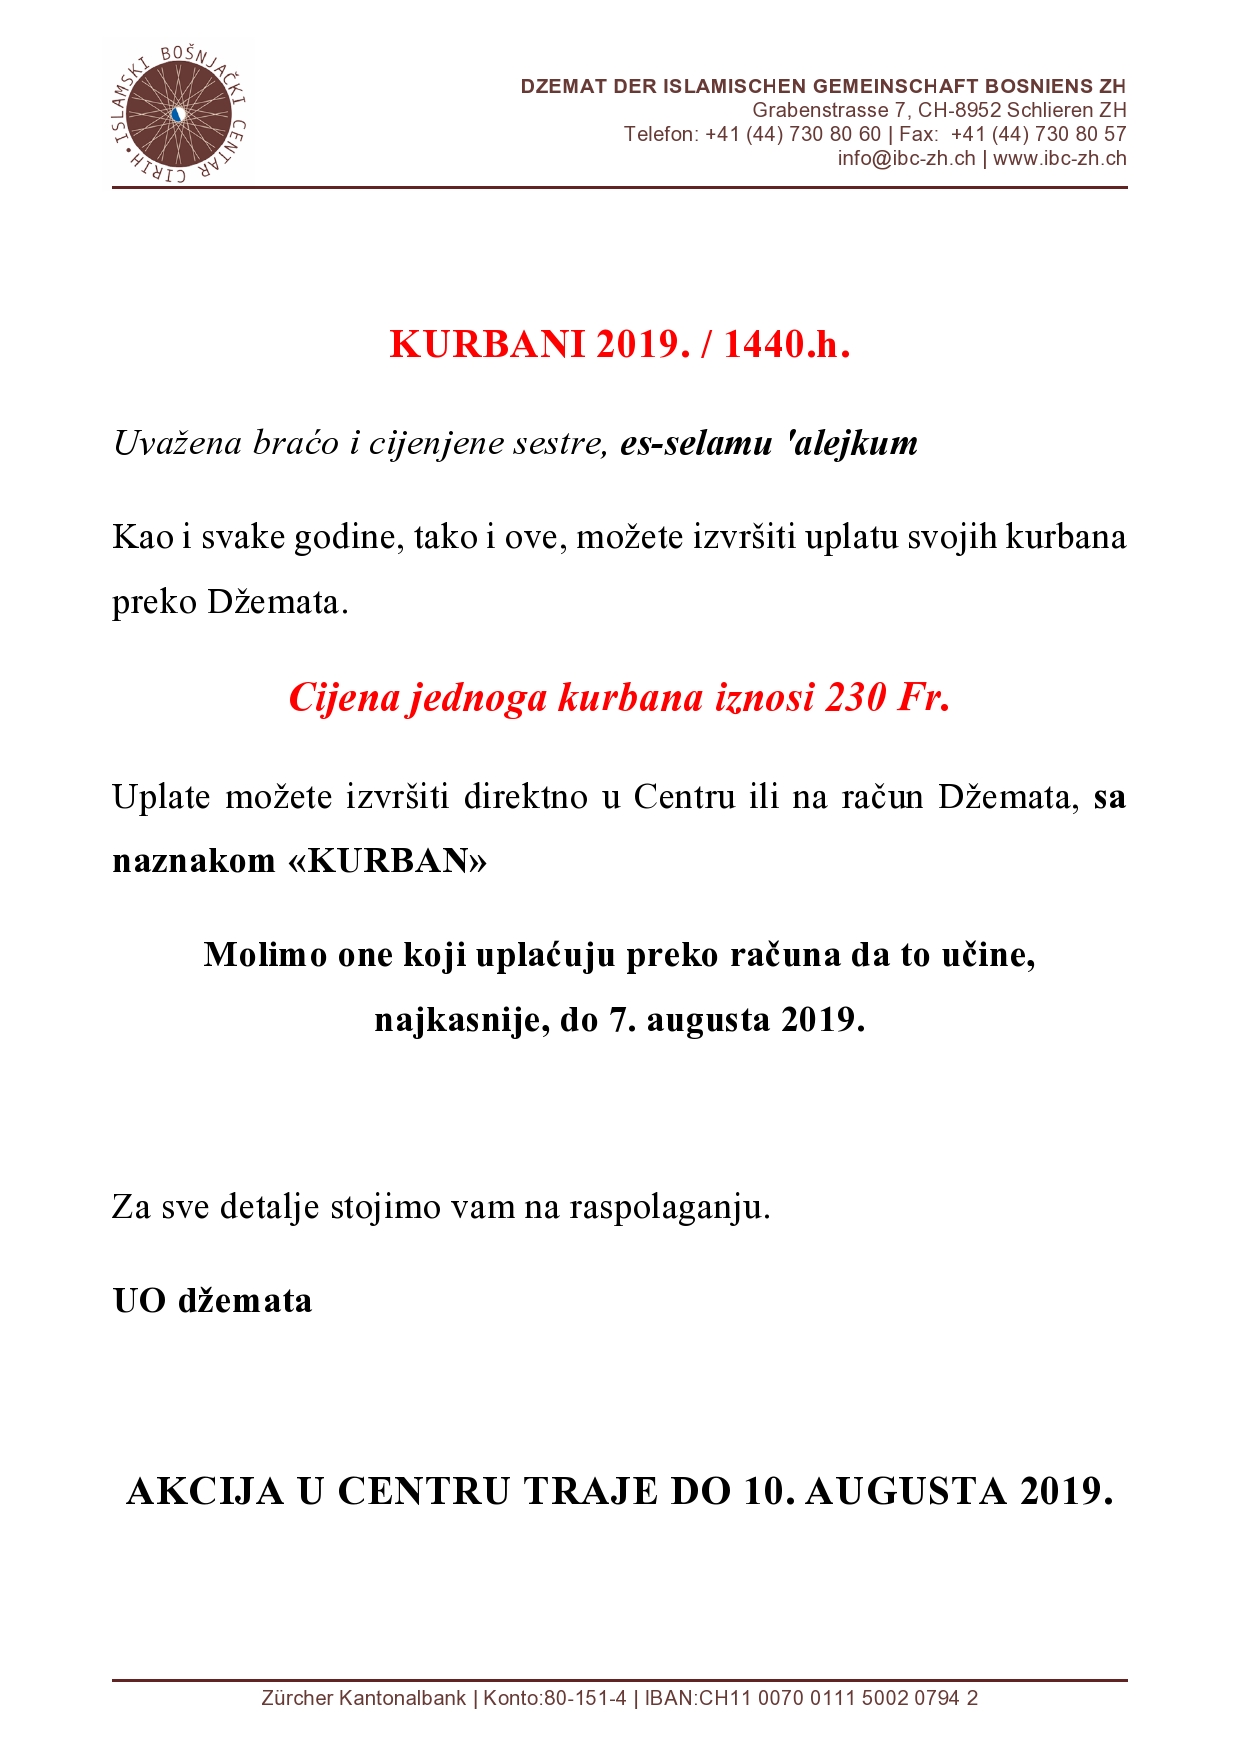 Kurban 2019.1440. page0001